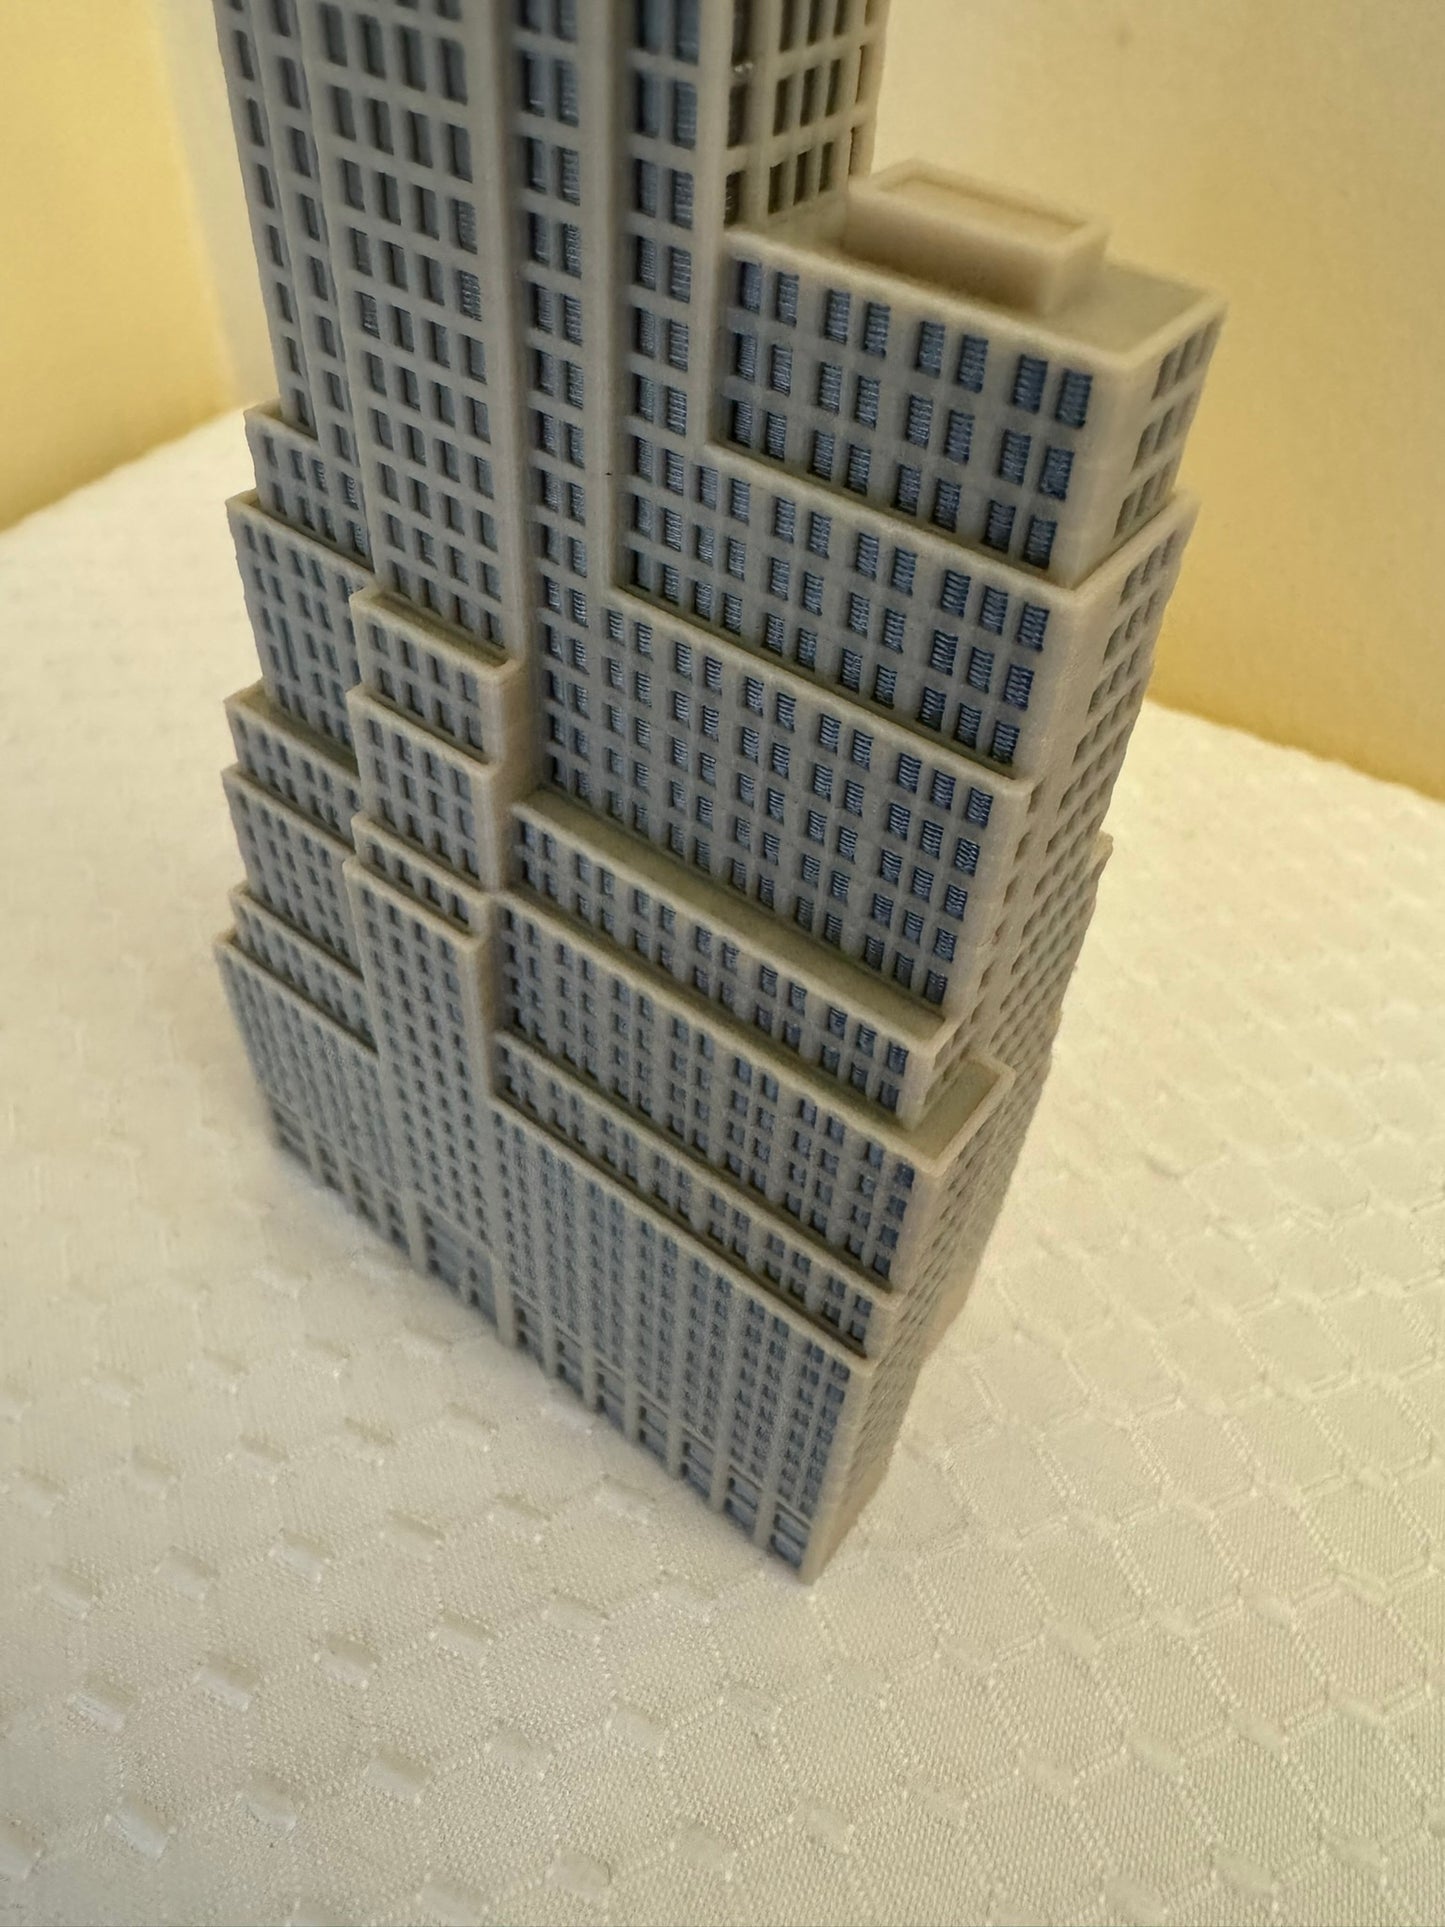 American International Building Model- 3D Printed Full Color